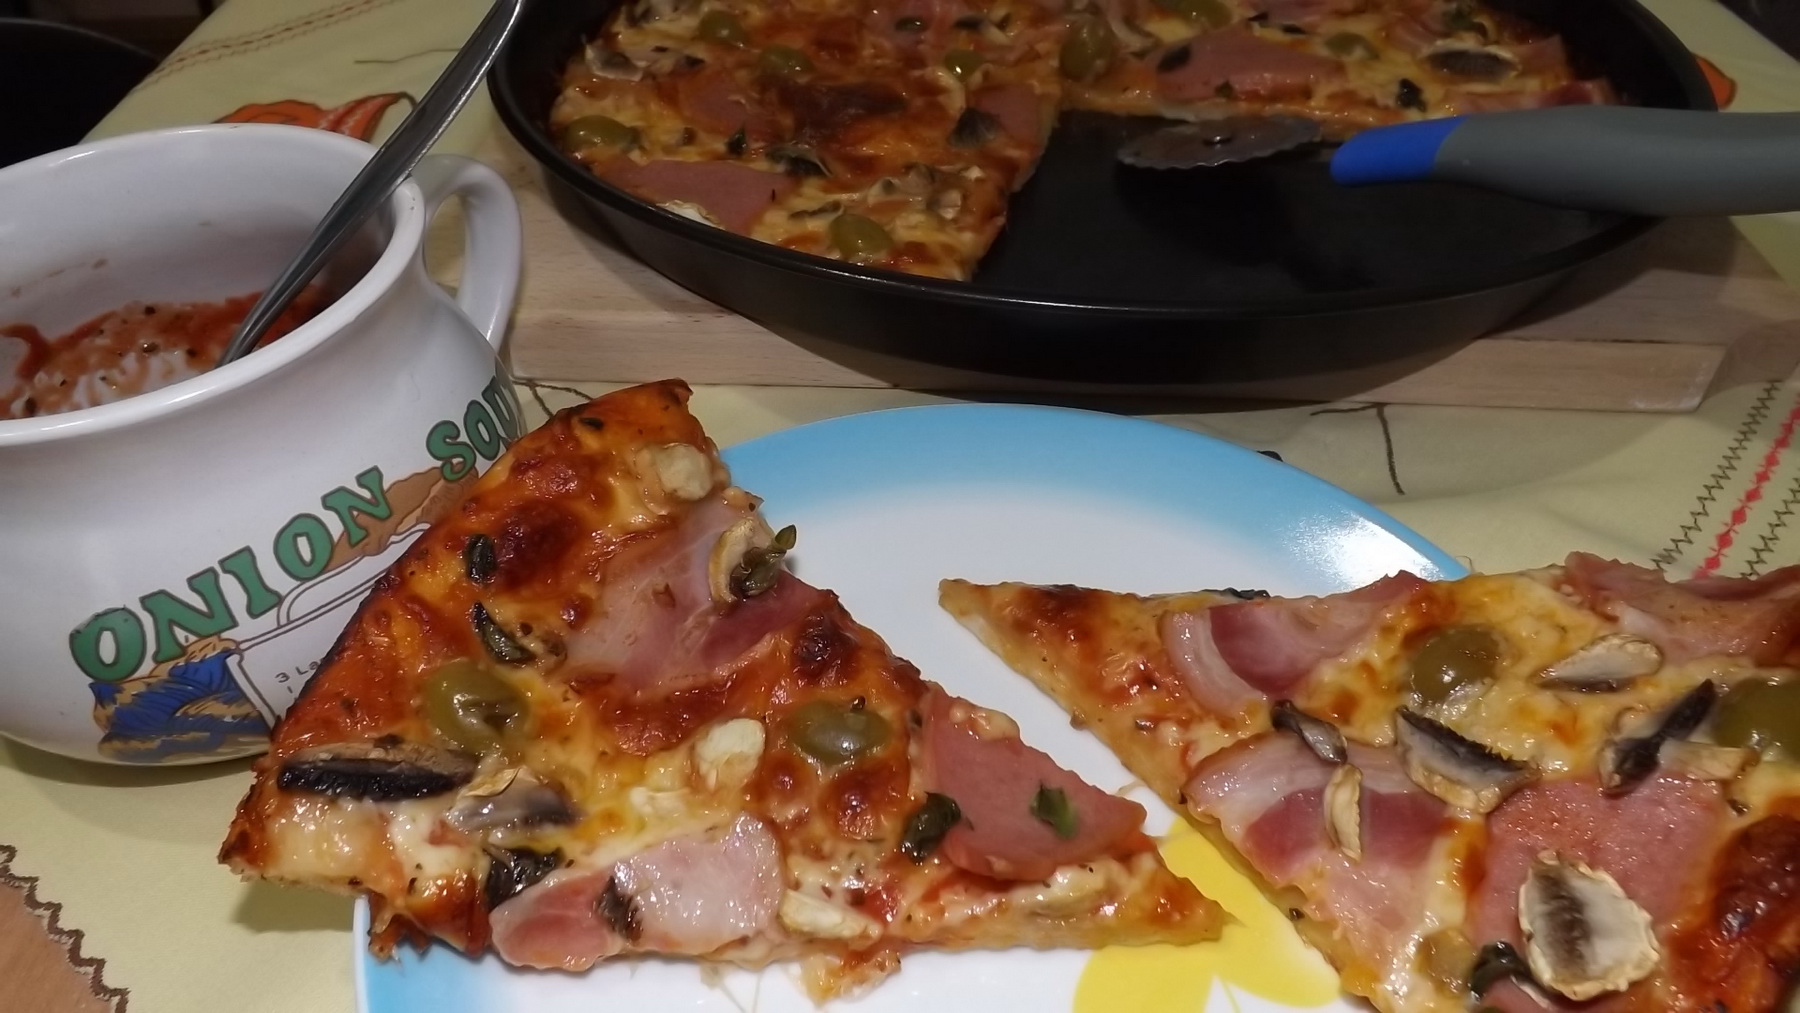 Pizza taraneasca